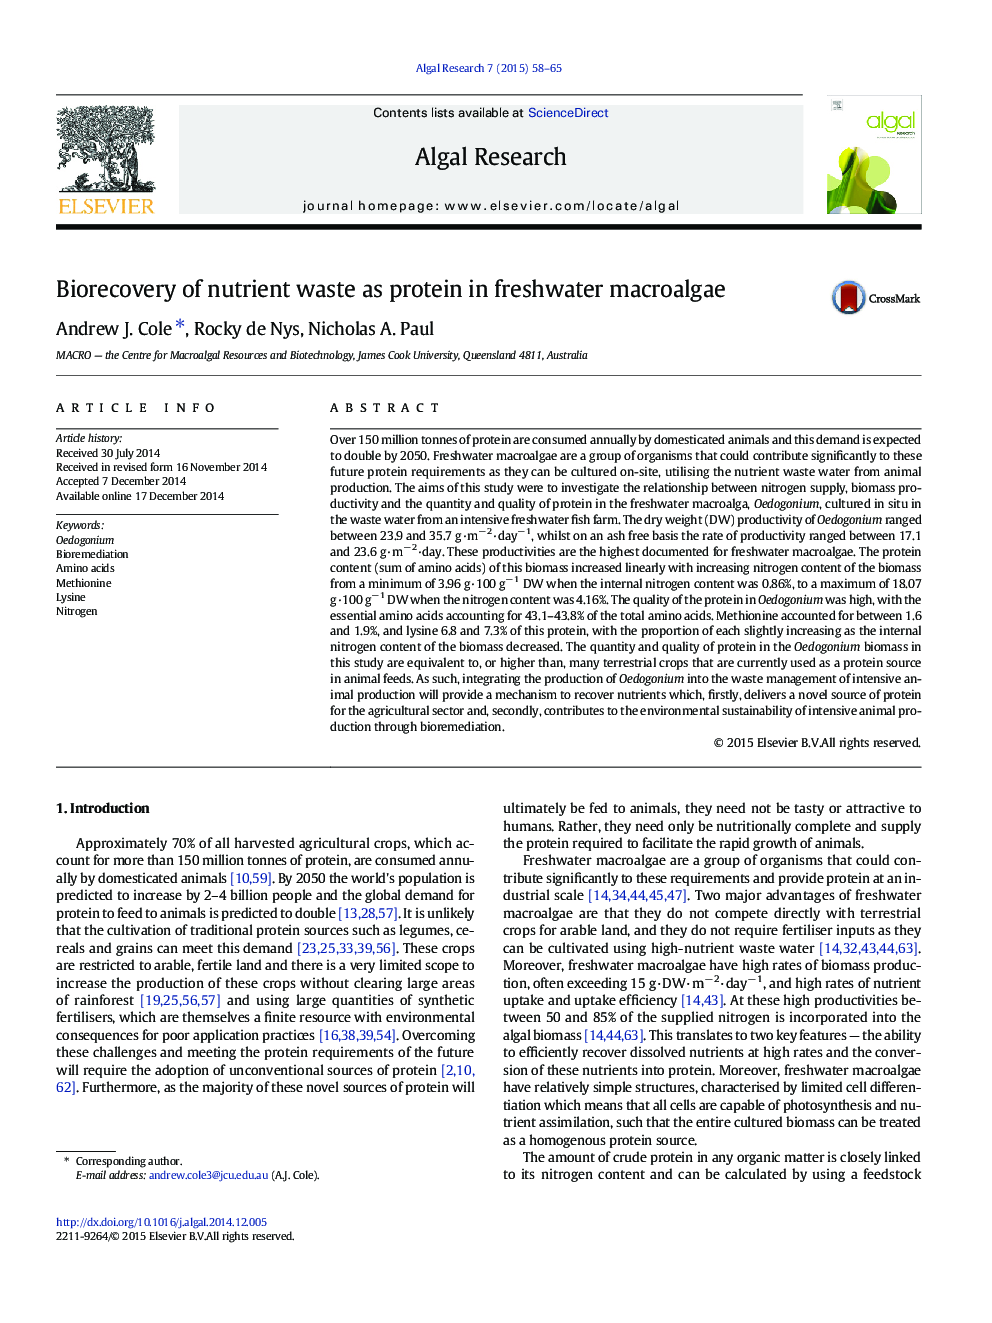 Biorecovery of nutrient waste as protein in freshwater macroalgae